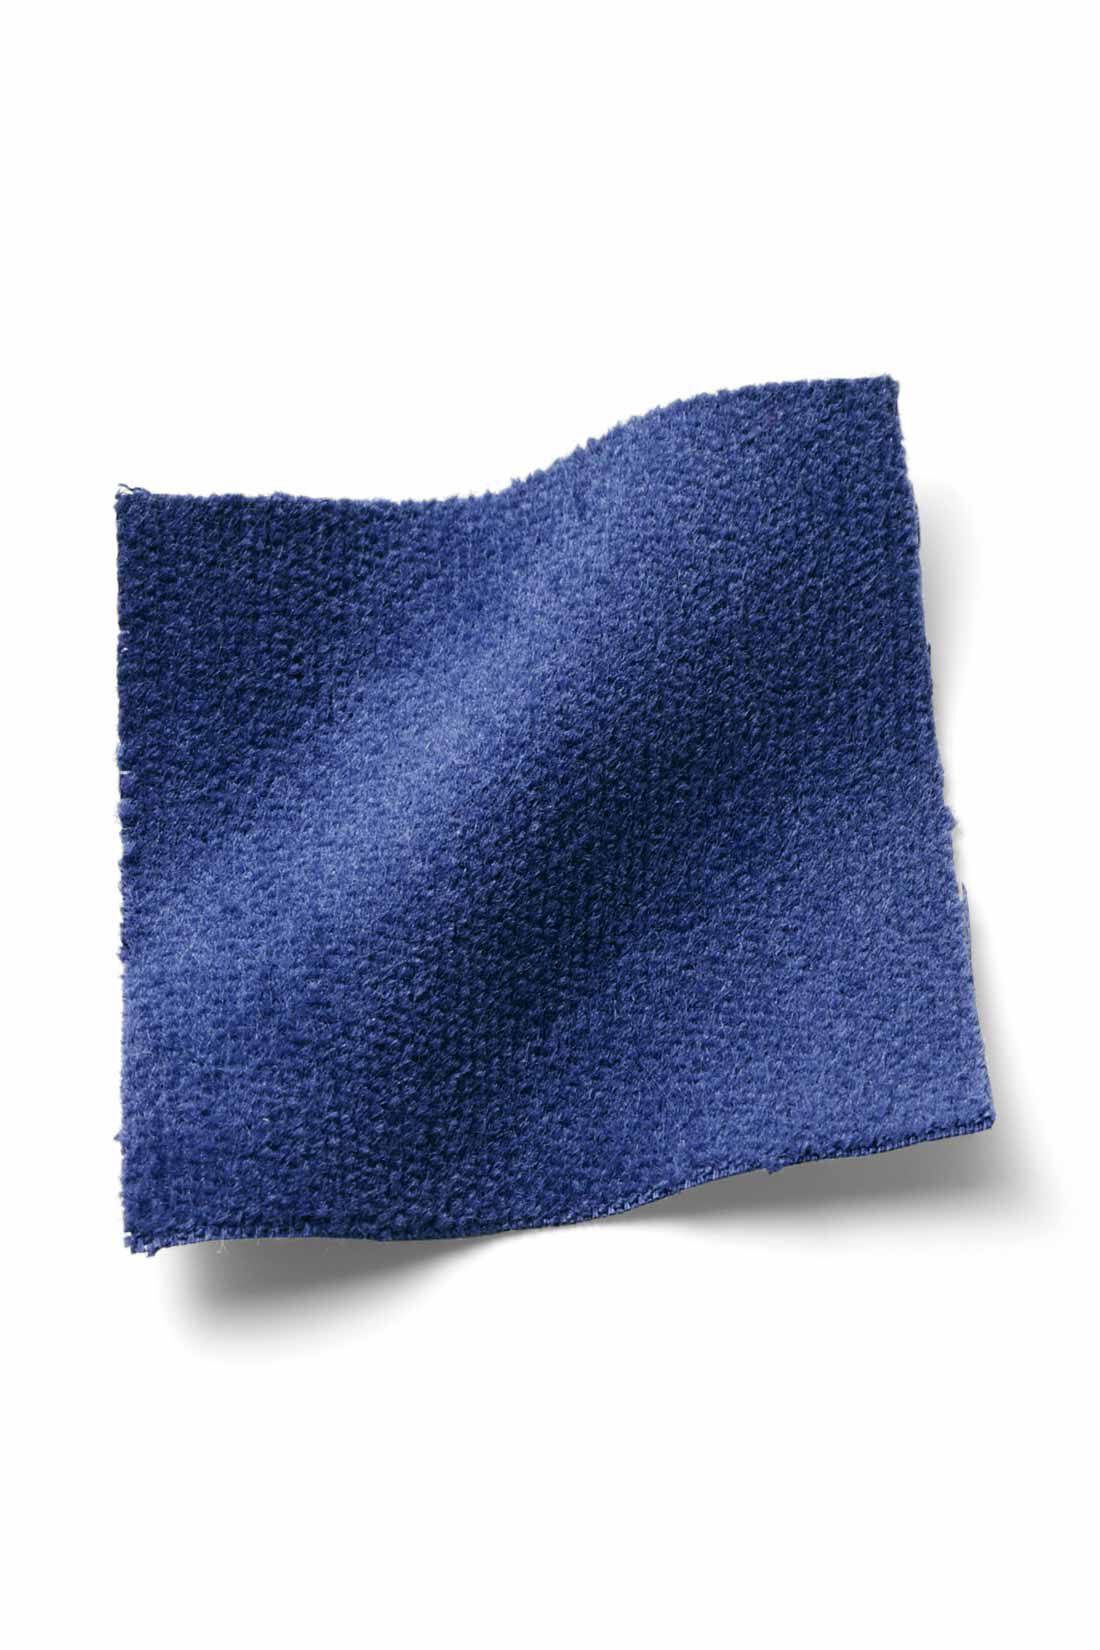 Real Stock|リブ イン コンフォート　キレイ見えをお約束 ぐい伸び別珍素材ジャンパースカート〈ブルー〉|イージーケアなのに高級感のある別珍素材。すべりのよい裏地付き。